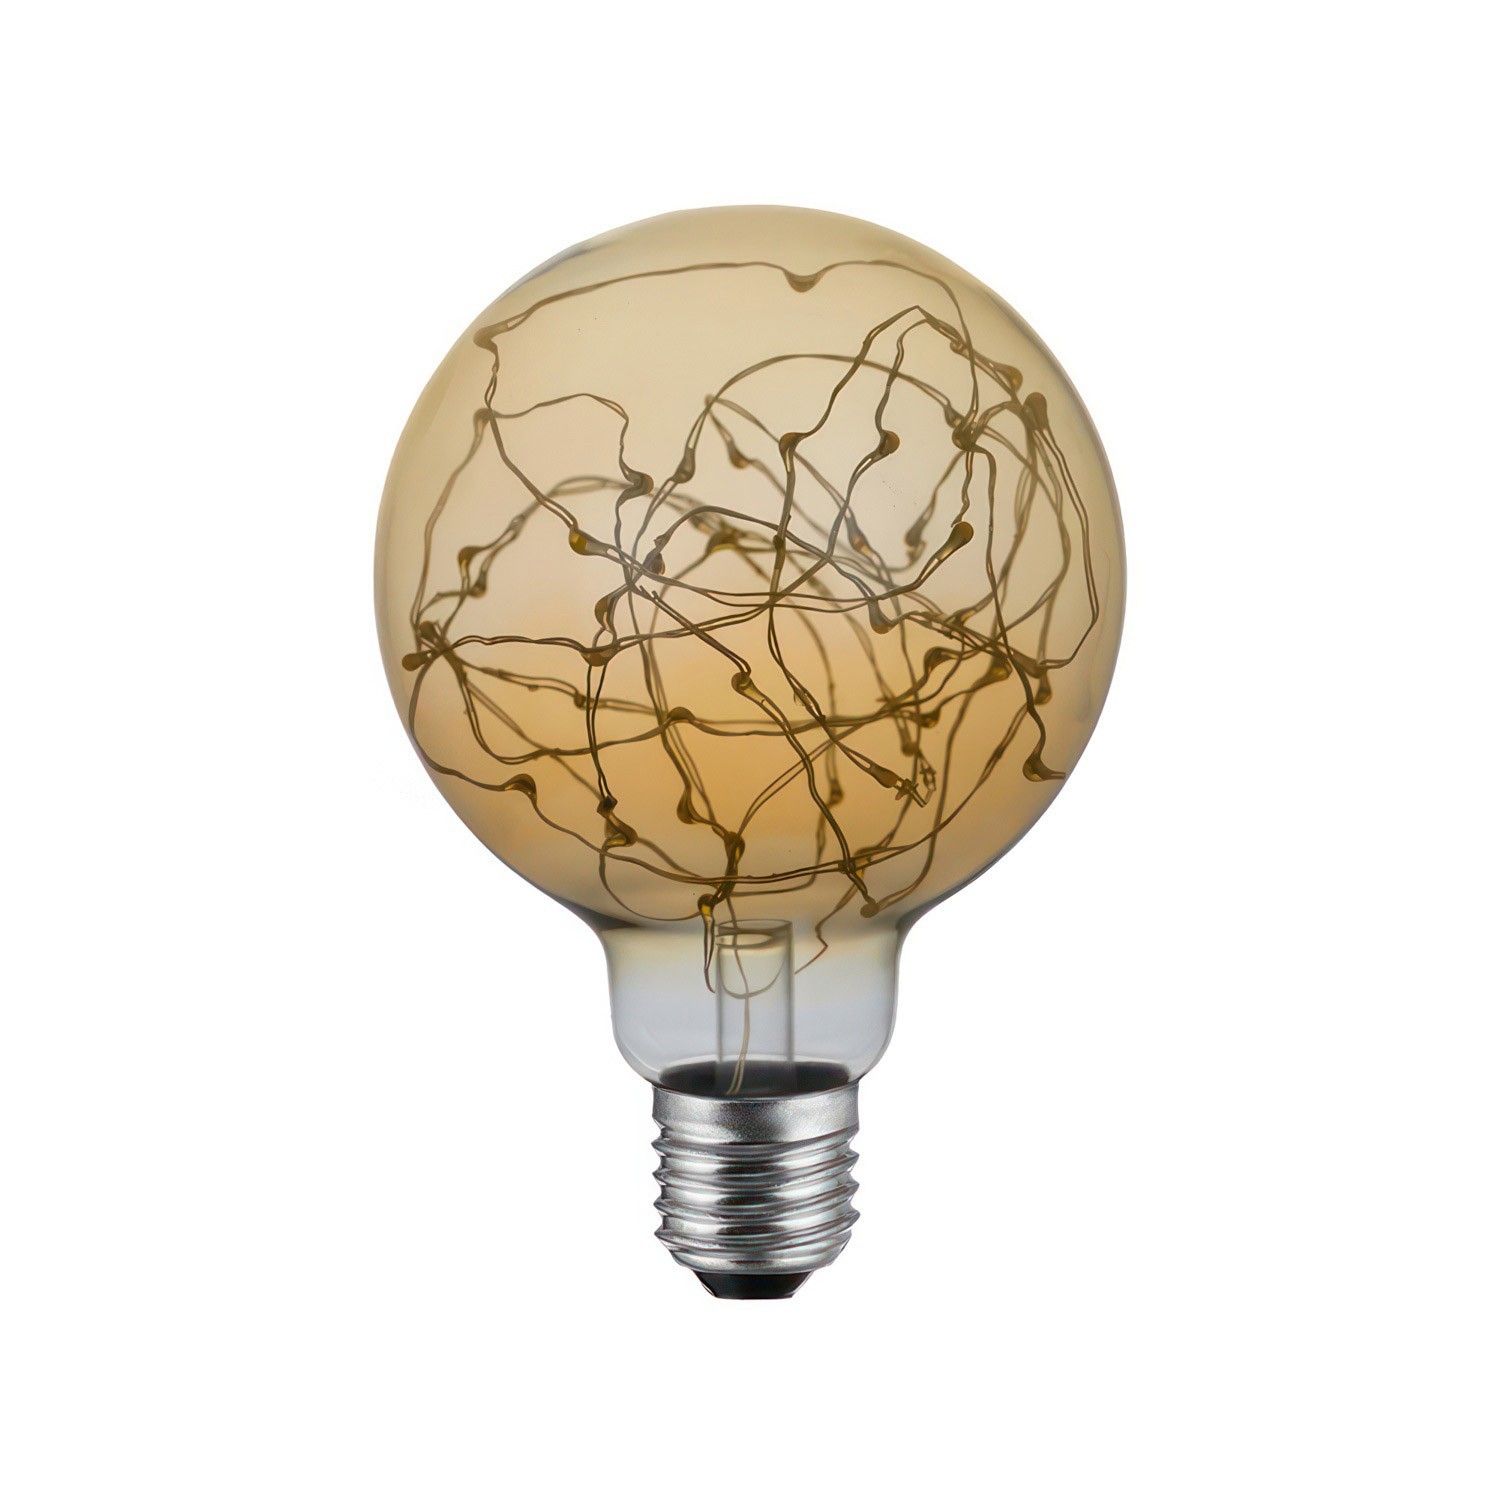 Lâmpada LED Globe G95 - A thousand Lights Gold 2W E27 2000K